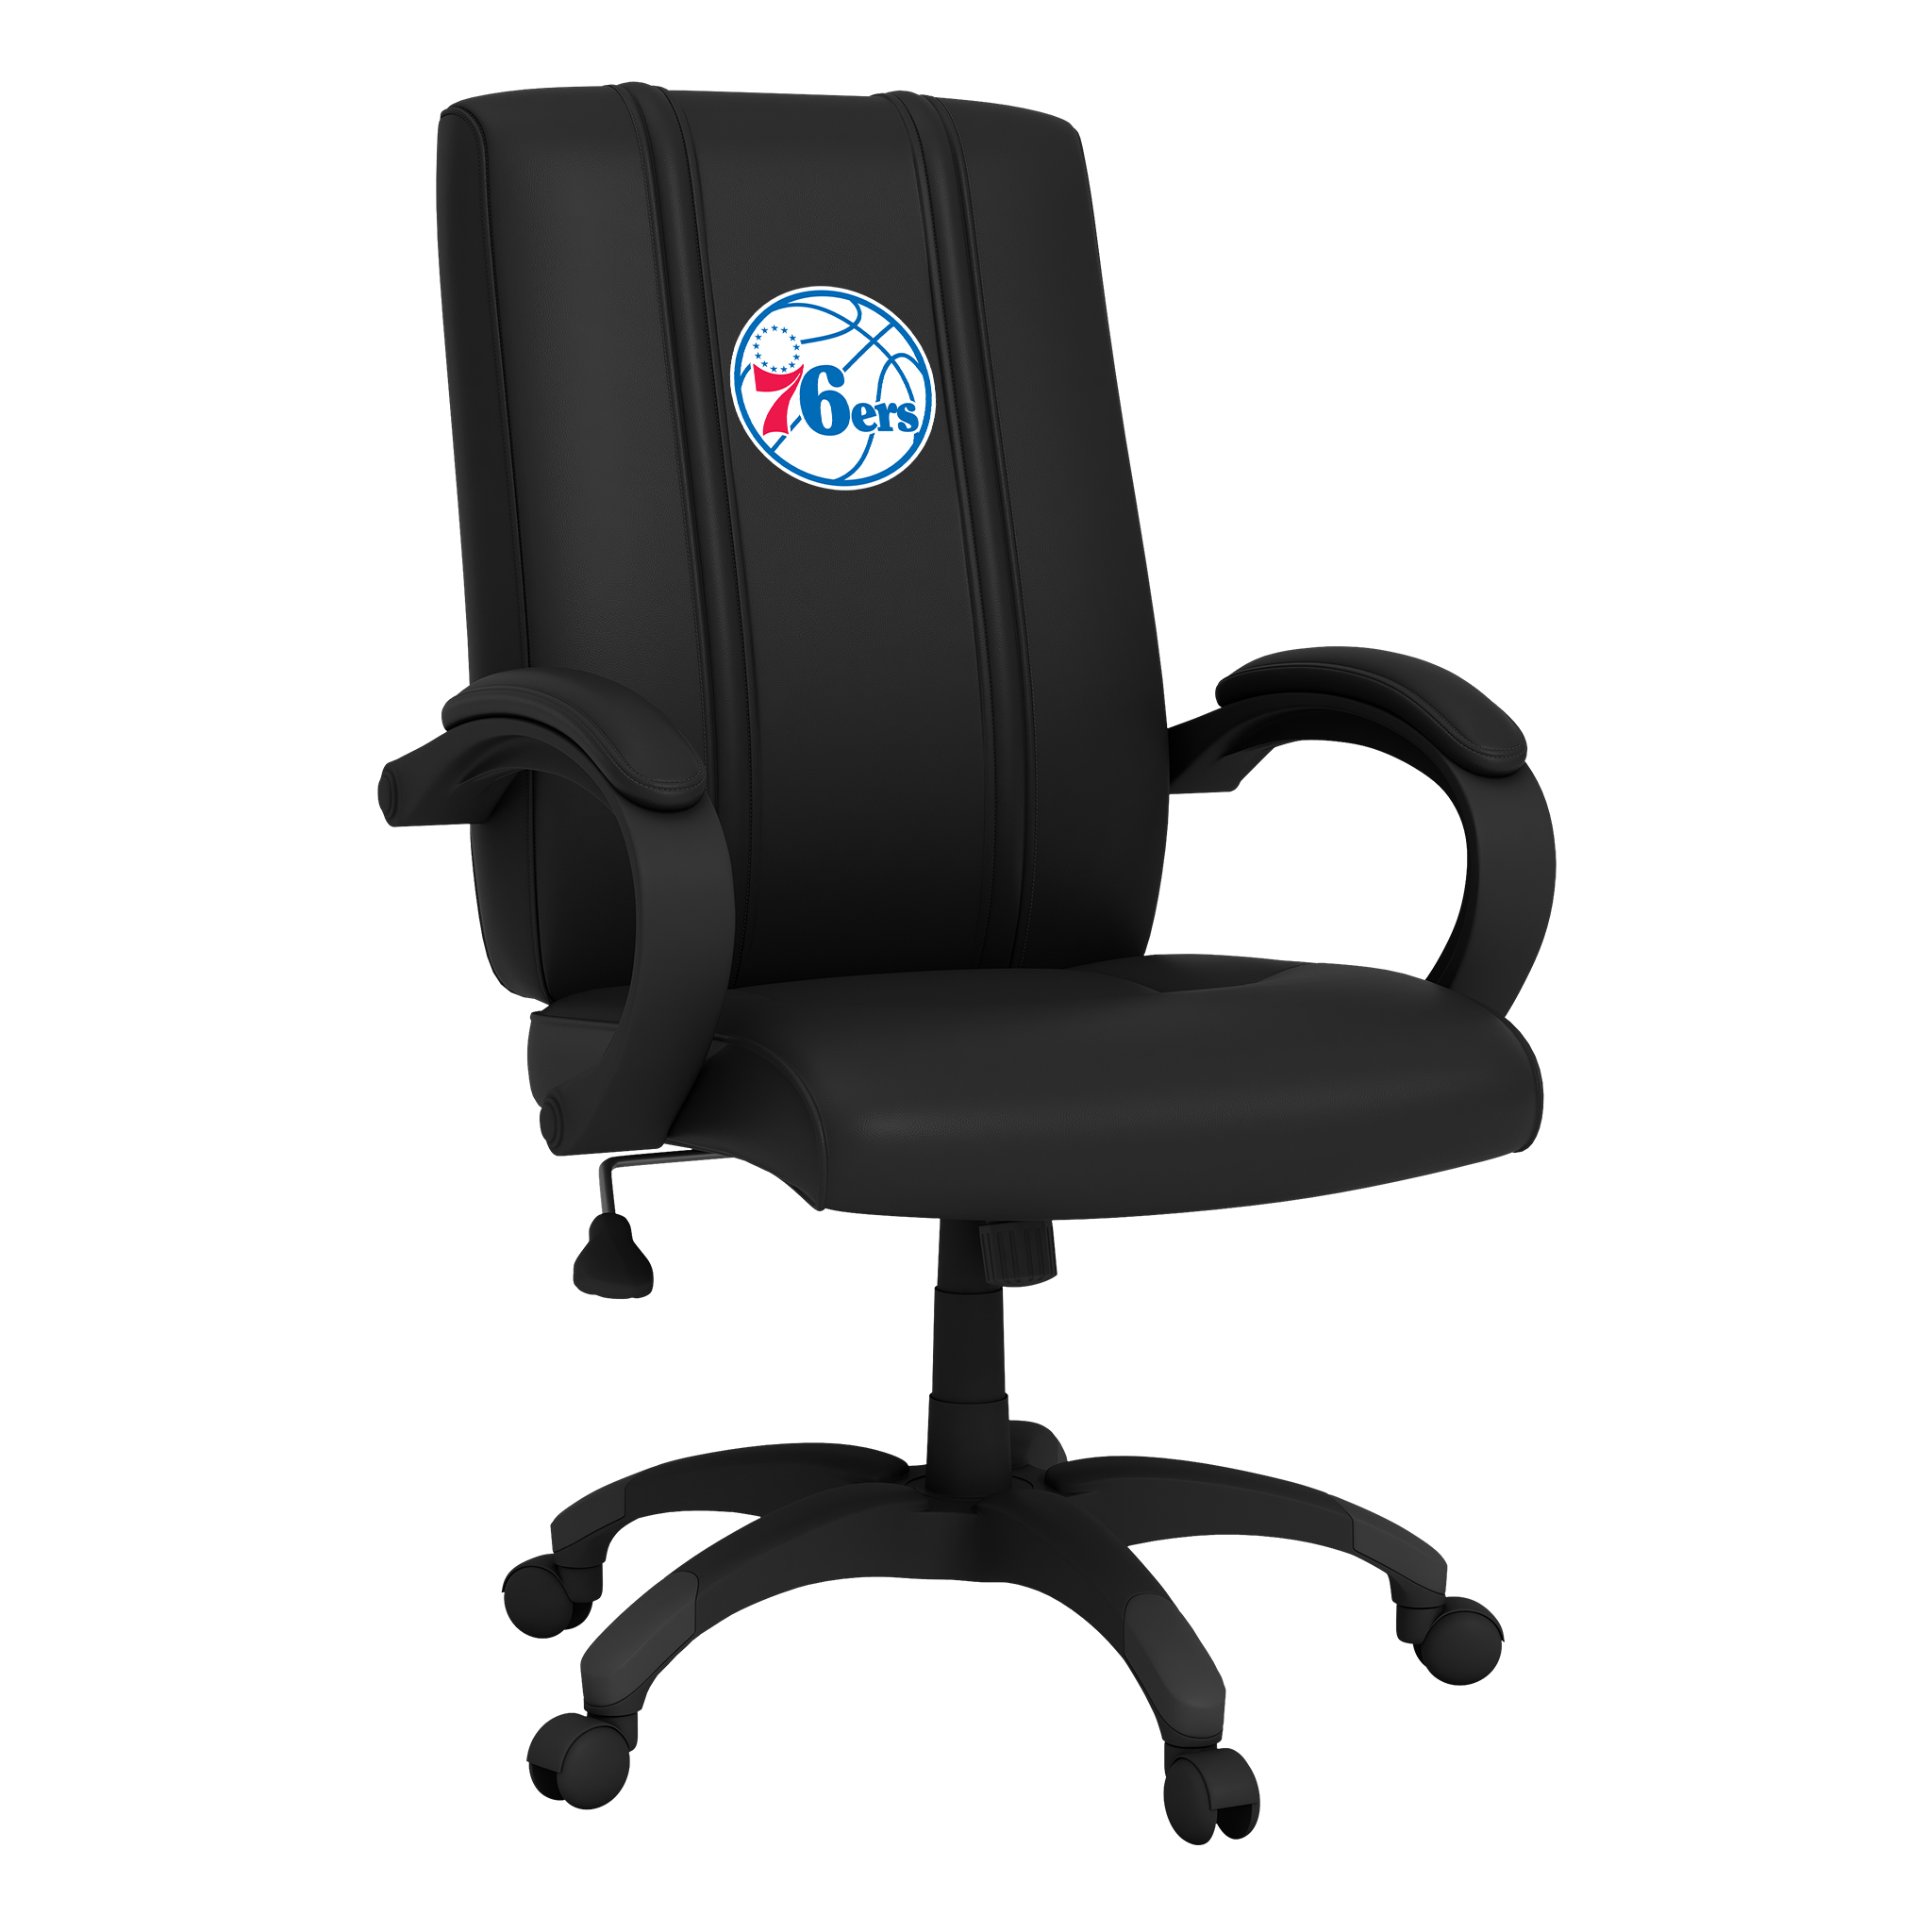 Philadelphia 76ers Office Chair 1000 with Philadelphia 76ers Primary